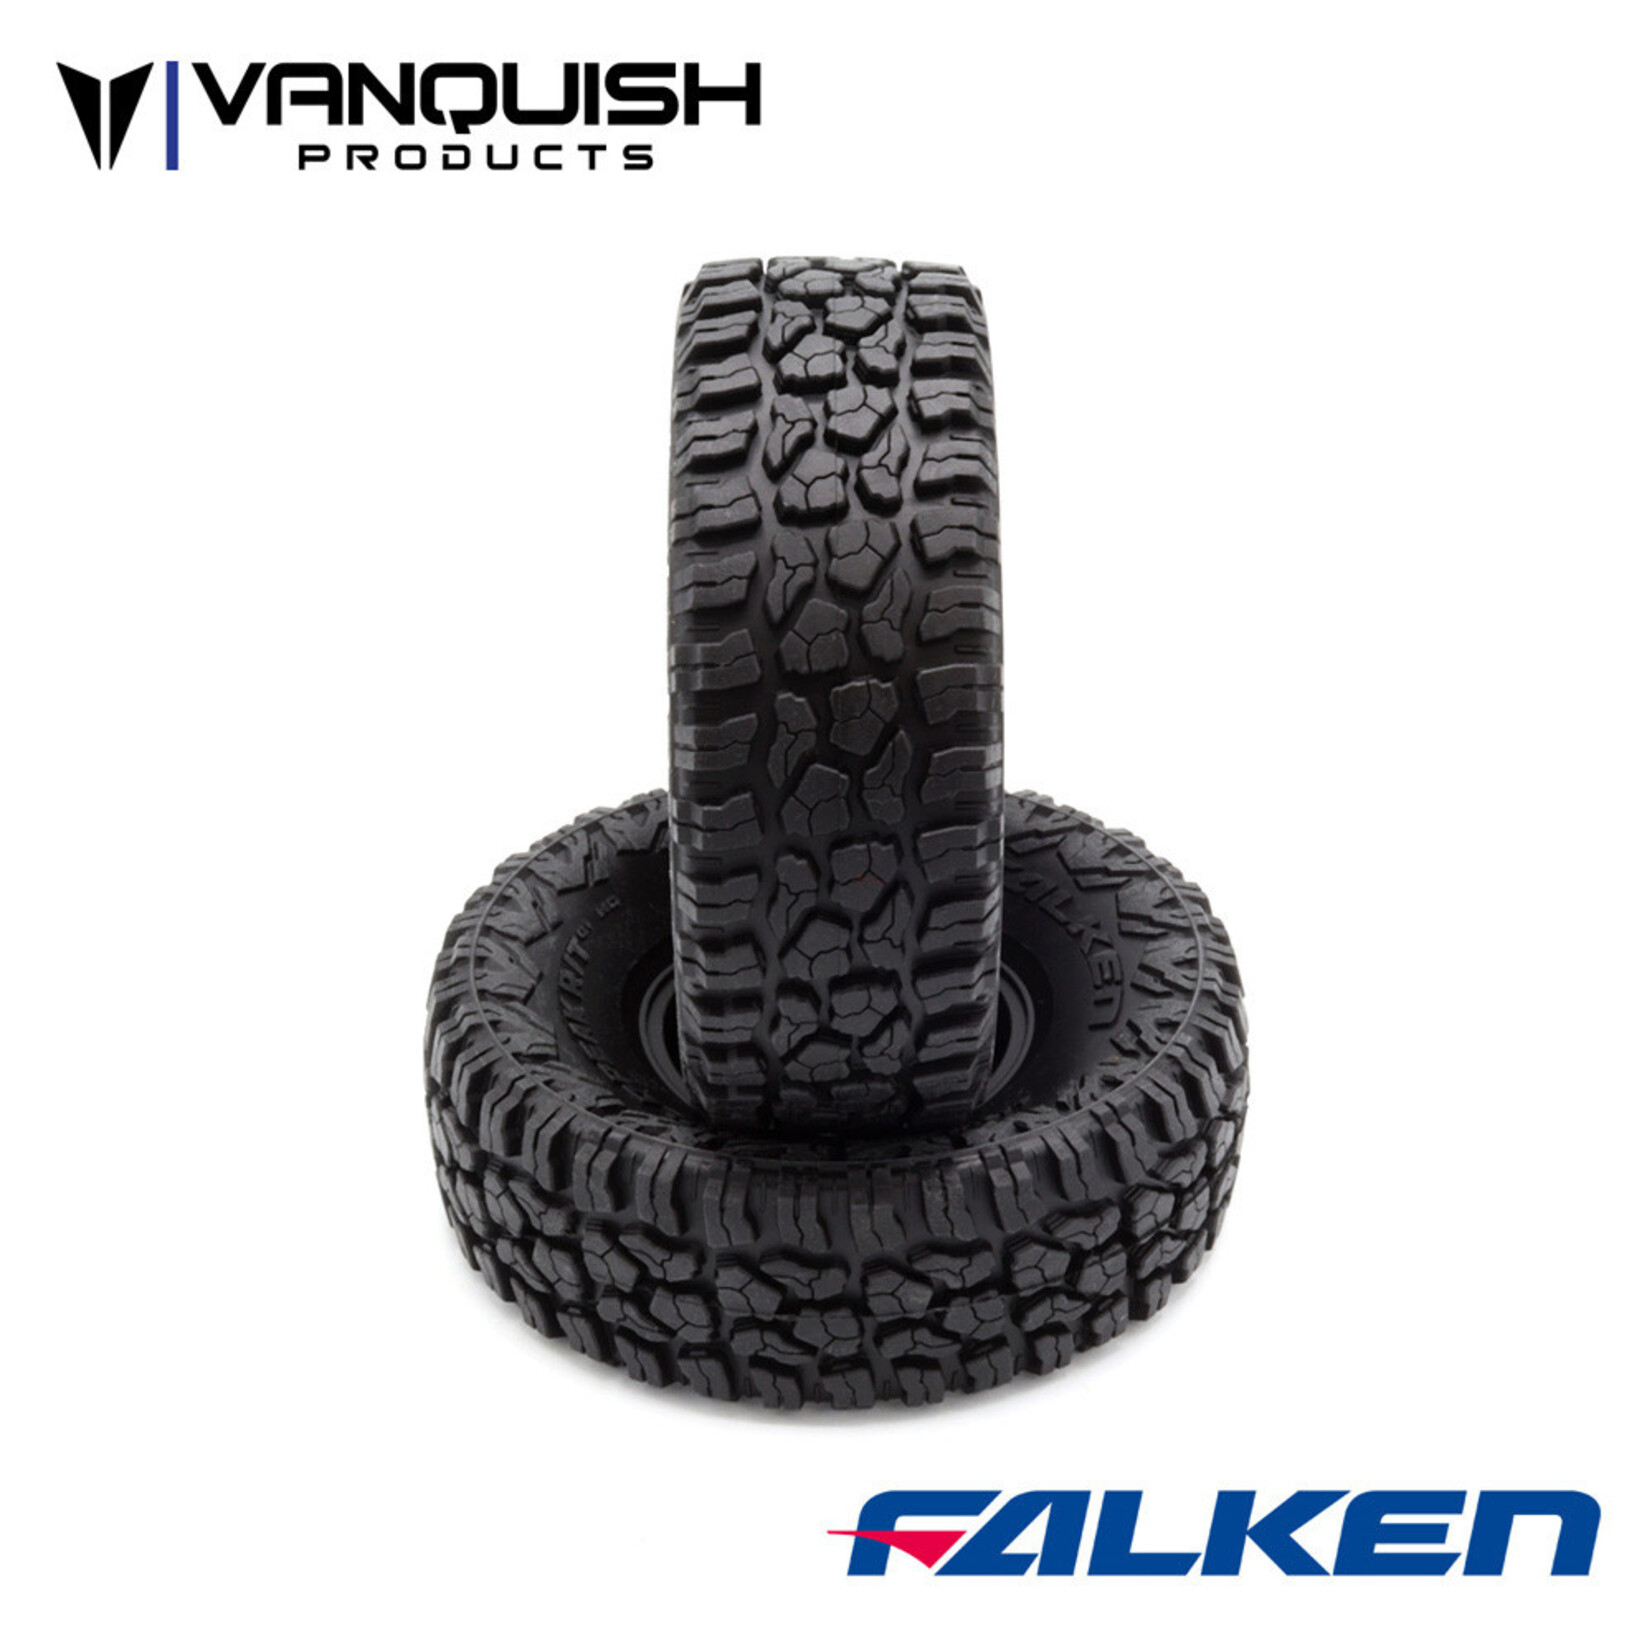 Vanquish Products Falken Wildpeak R/T 1.9" Class 1 Rock Crawler Tires (2) (Red)